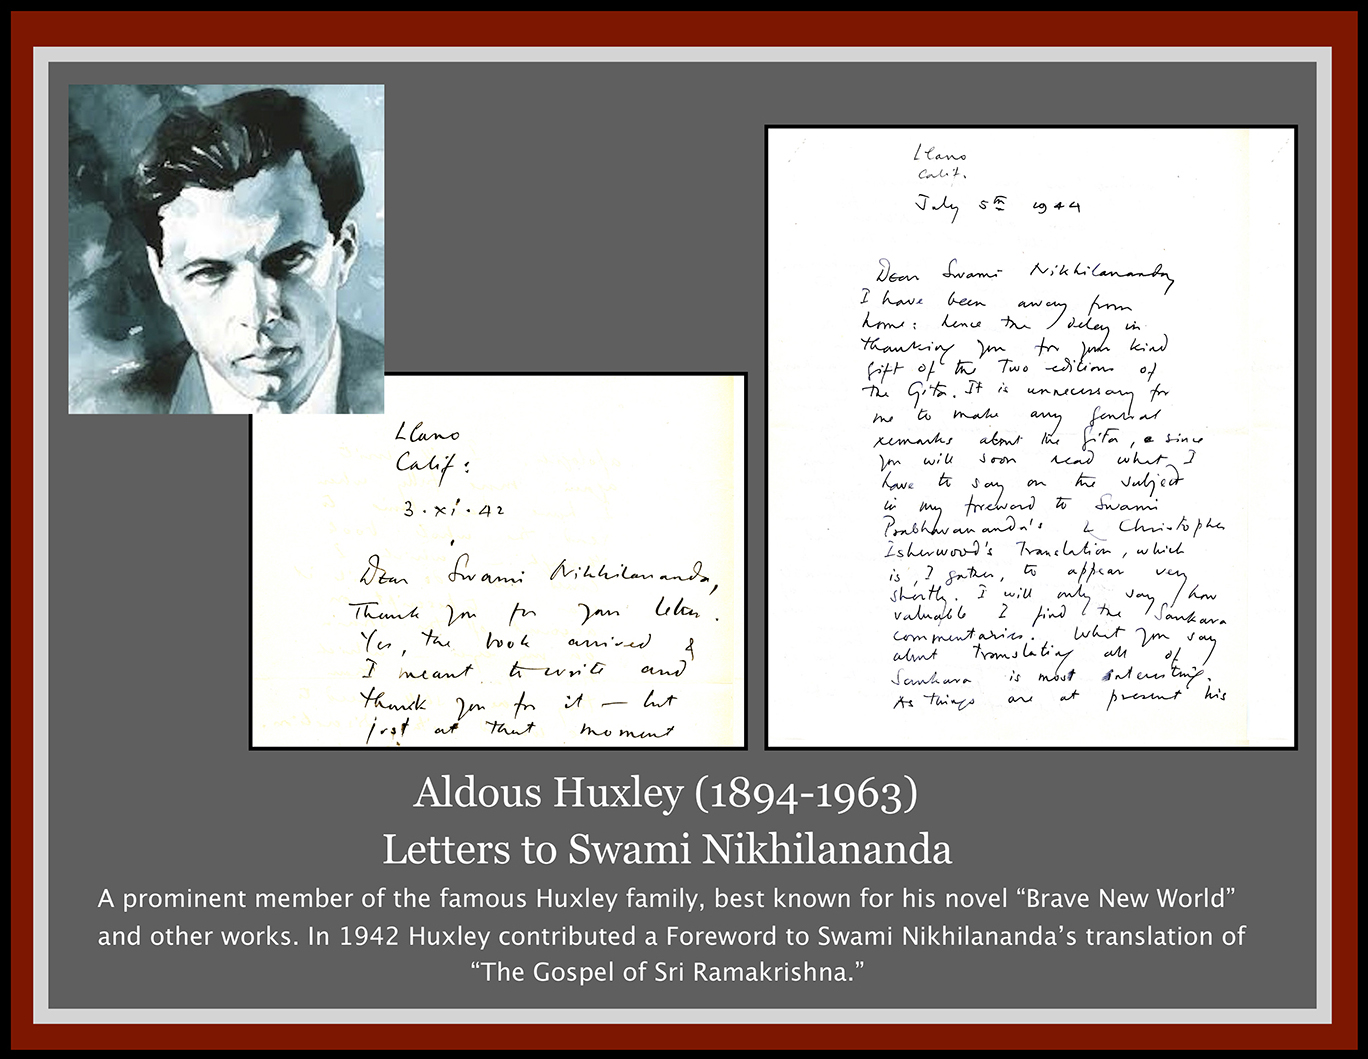 letters to Swami Nikhilananda from Aldous Huxley.